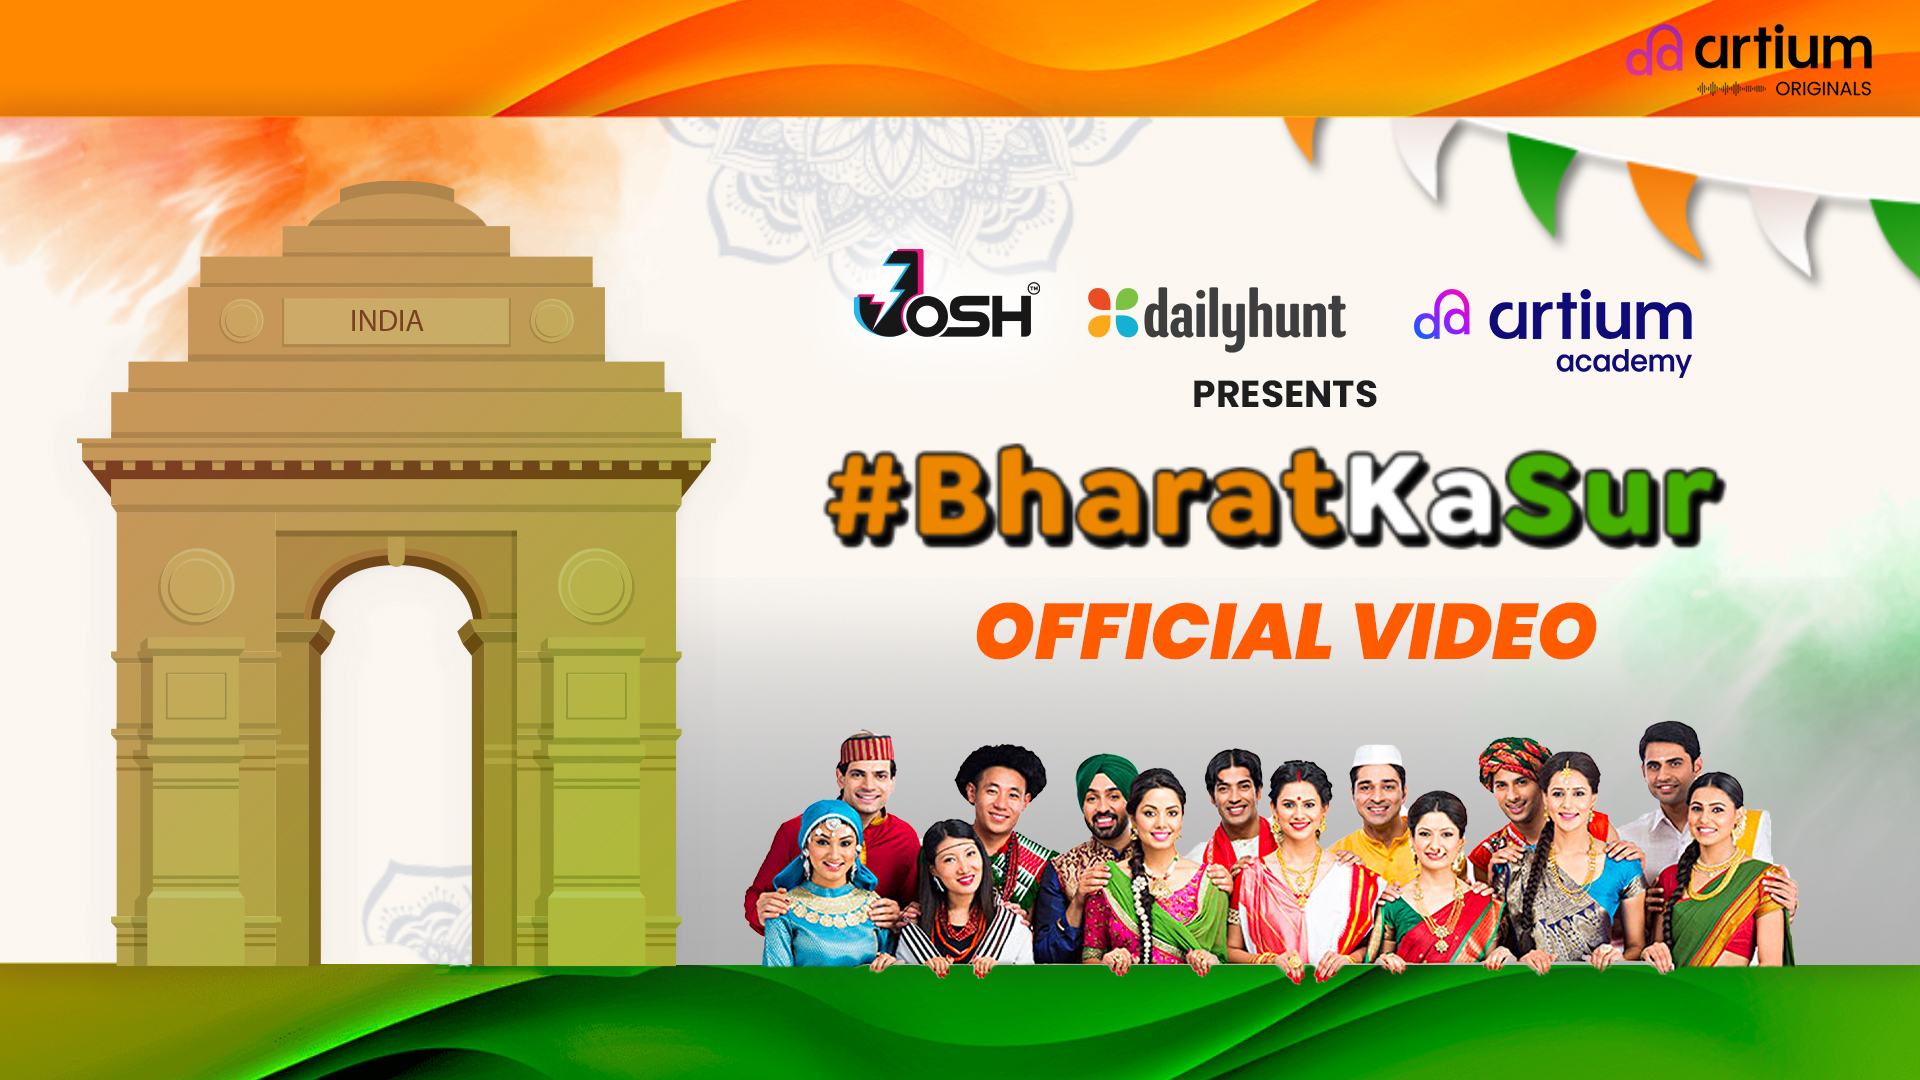 Josh and Artium Academy unveil “Bharat Ka Sur”, India’s biggest UGC anthem on Independence Day